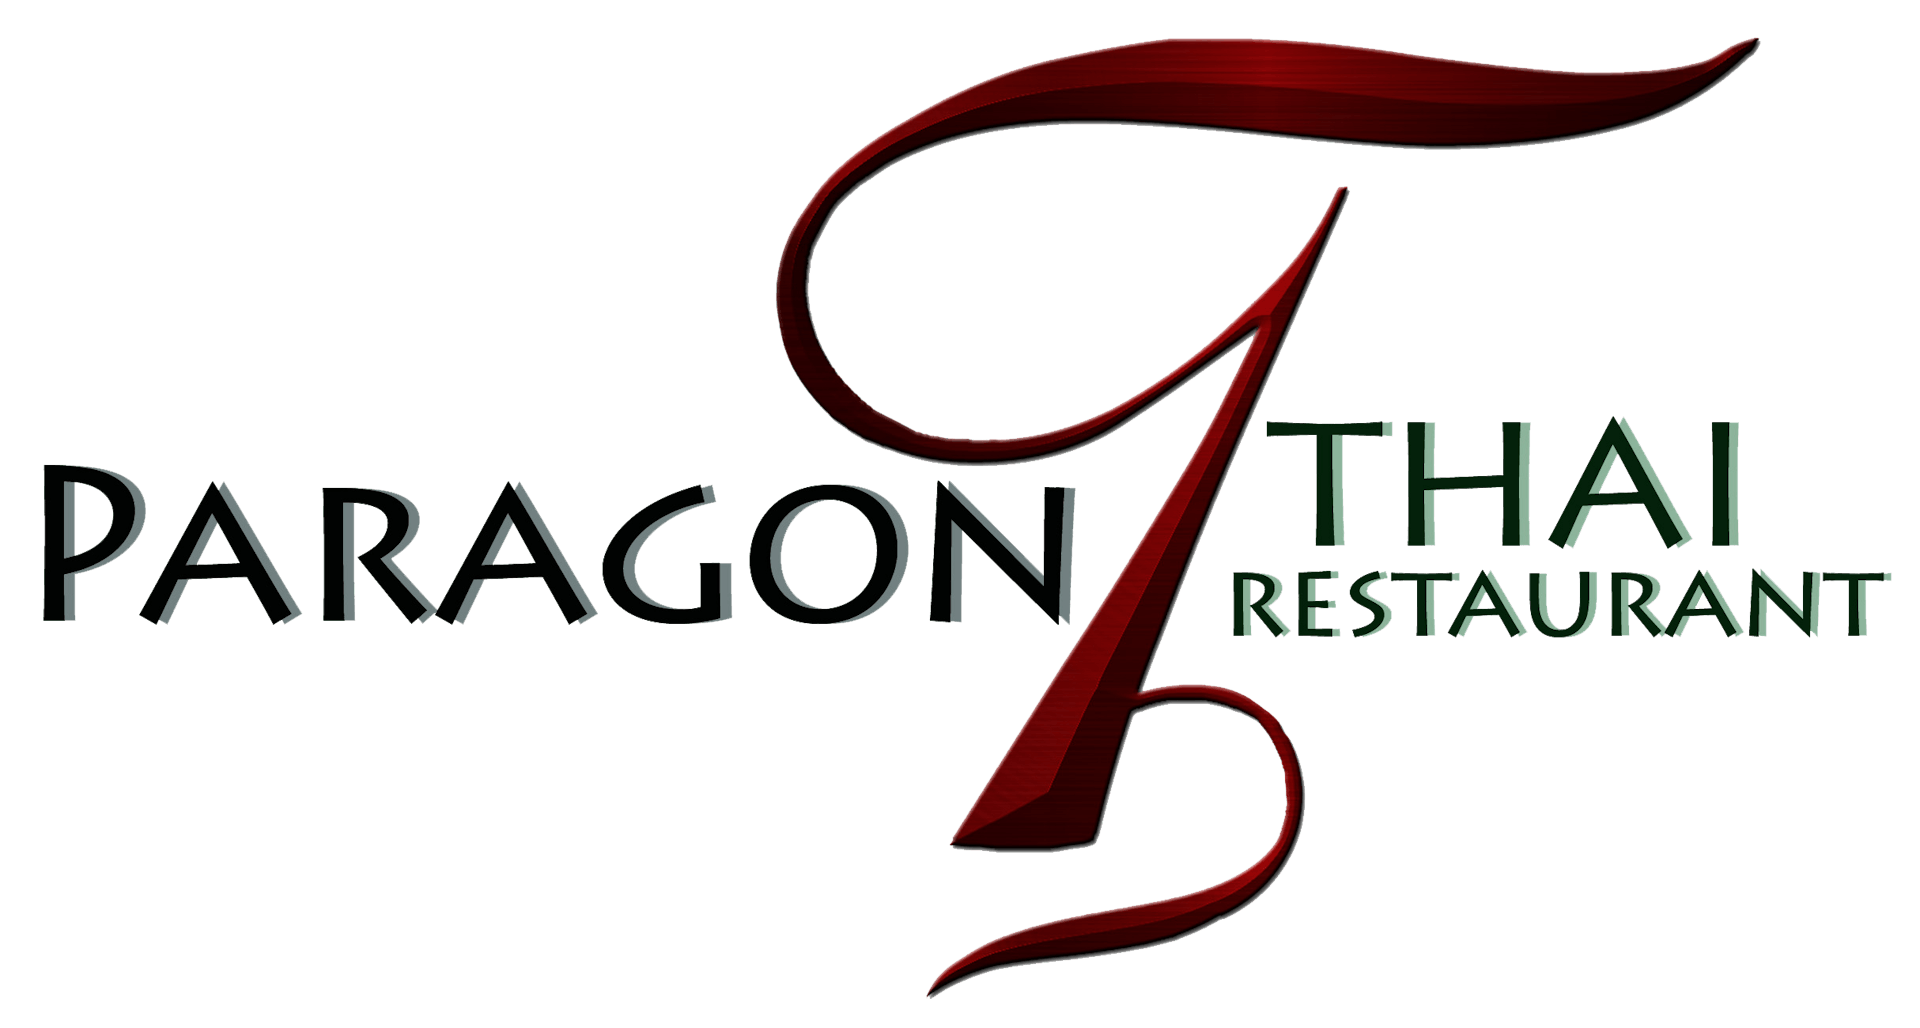 Paragon Thai Restaurant